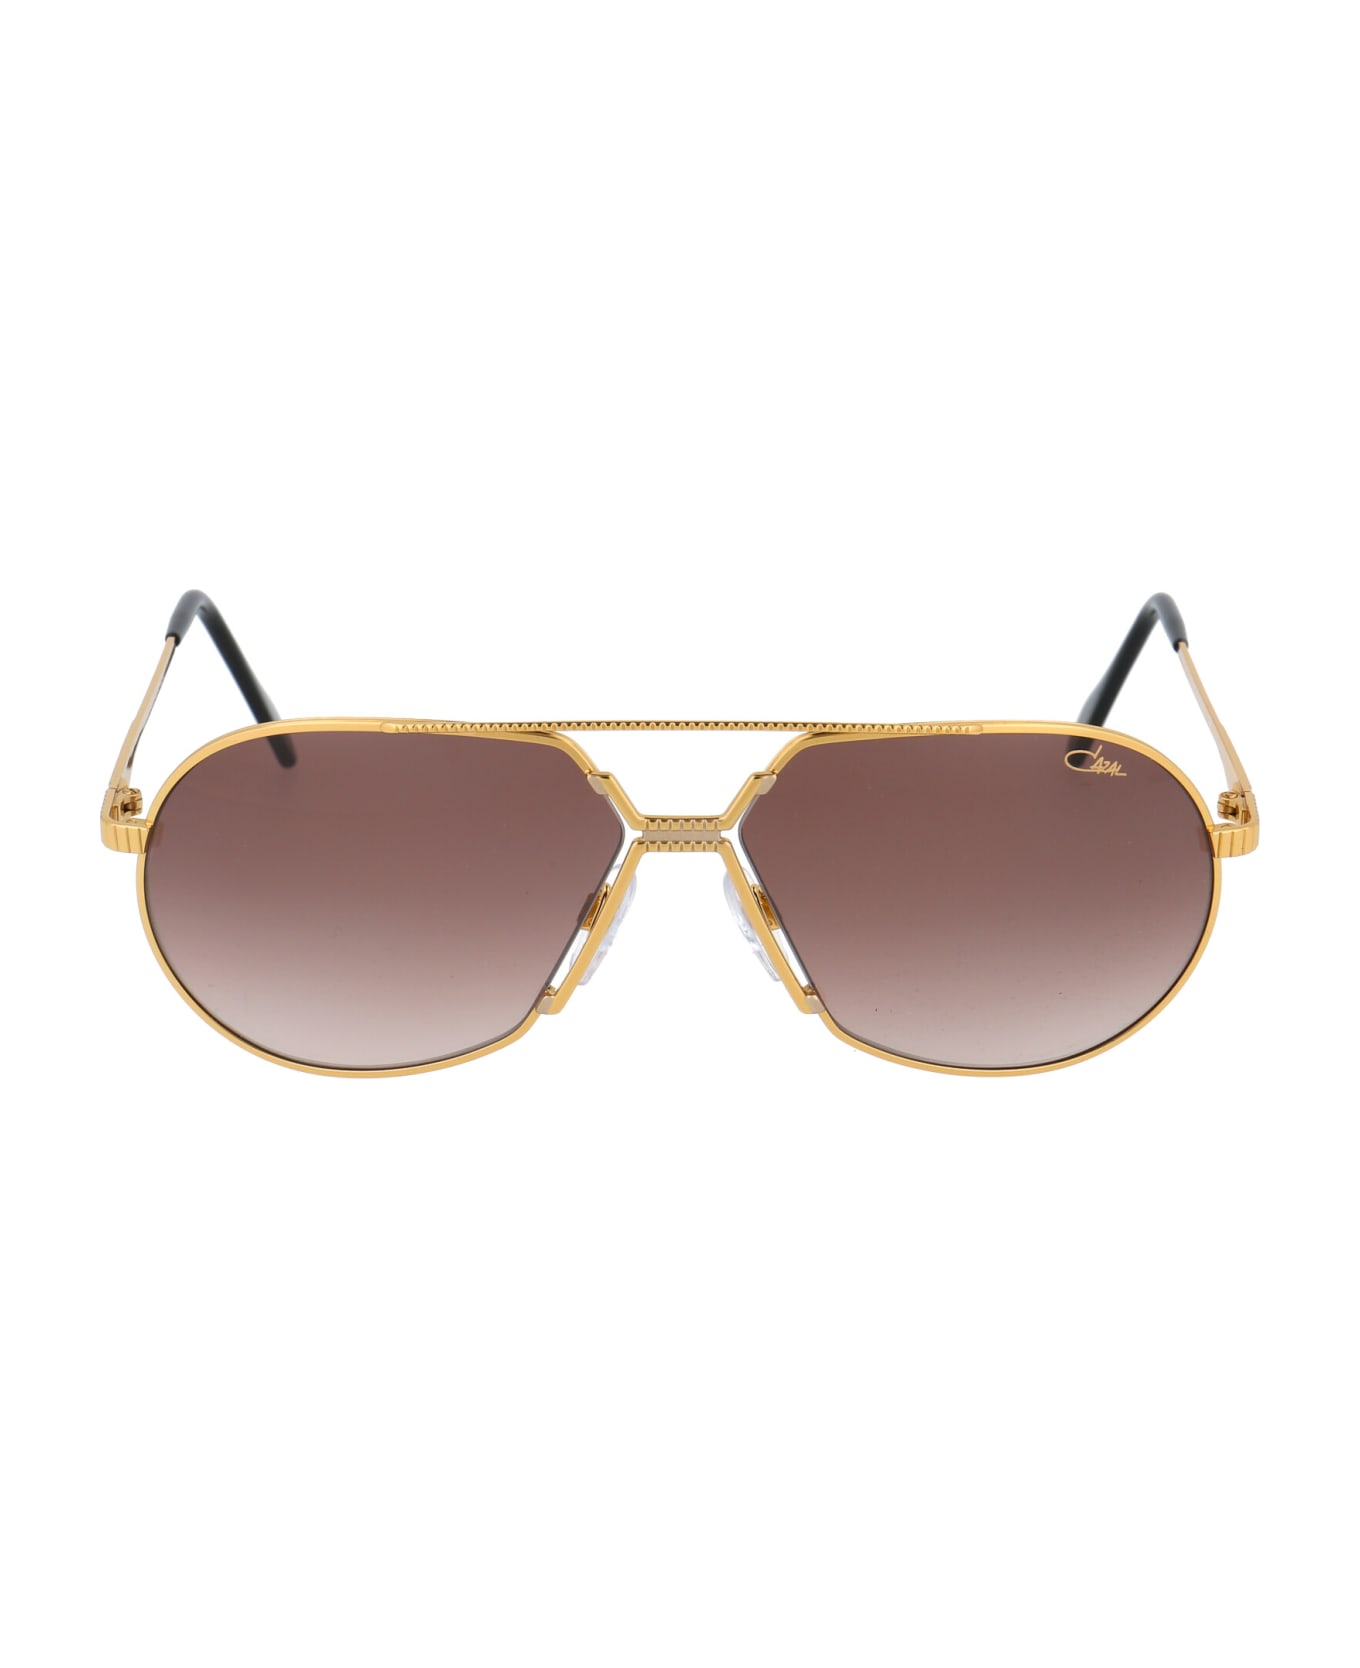 Cazal Mod. 968 Sunglasses - 003 GOLD